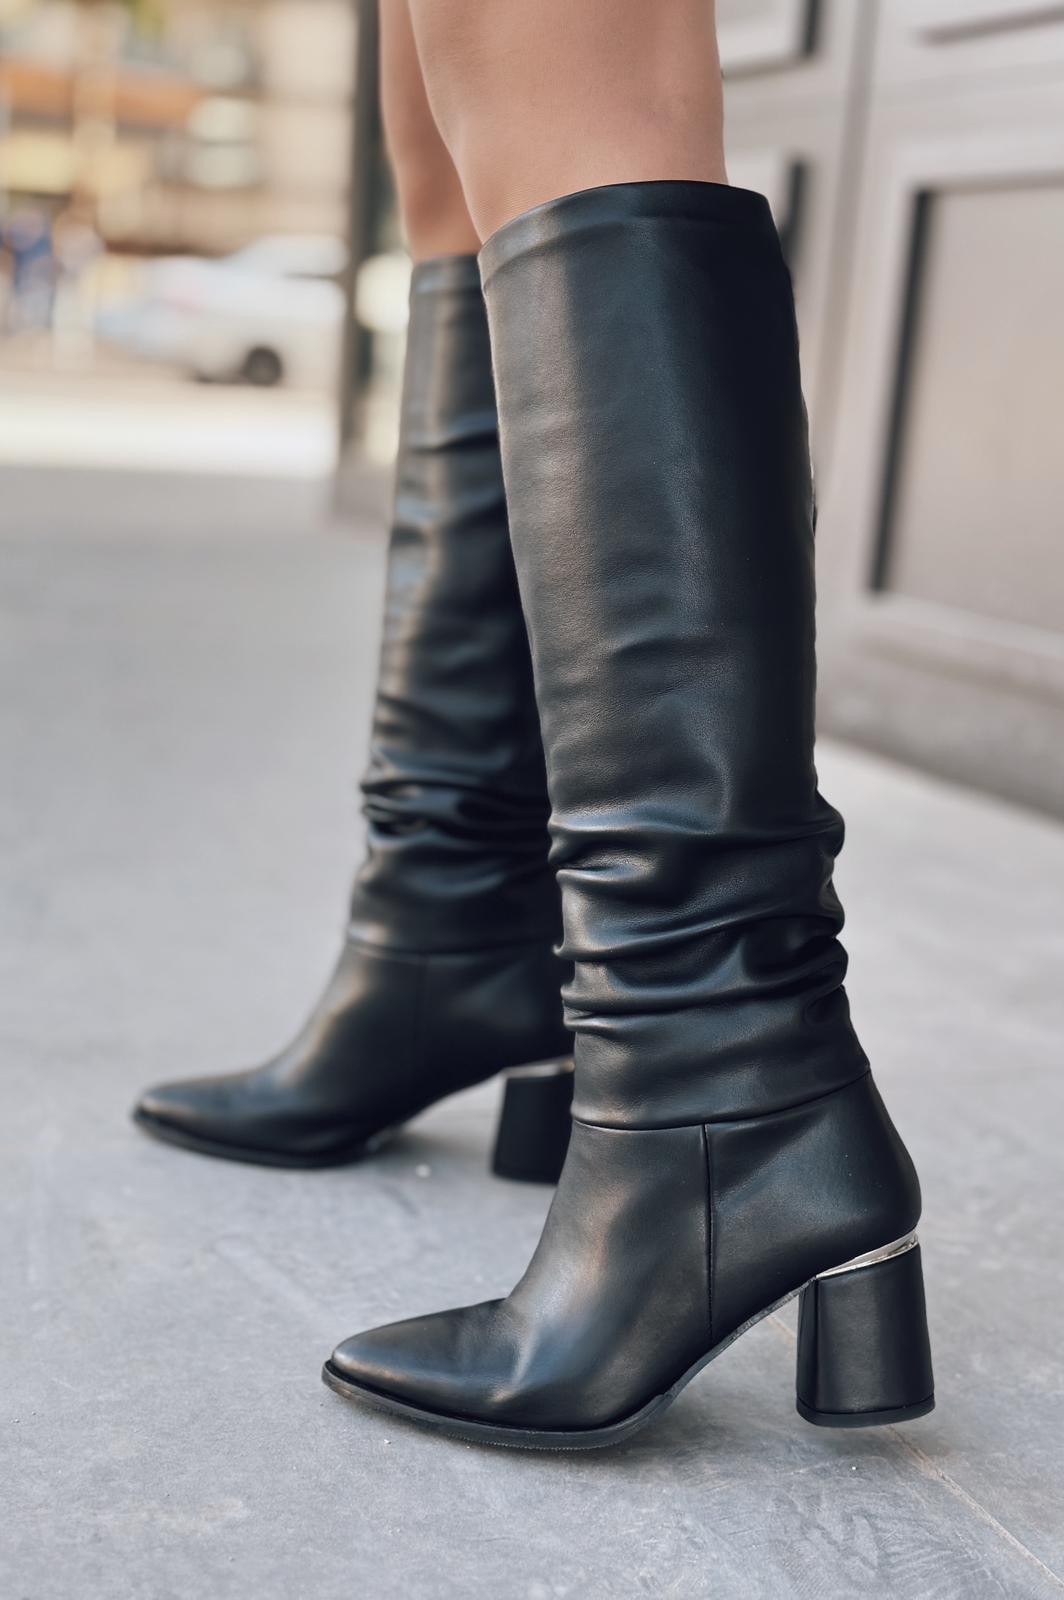 Votens Mat Deri Körüklü Kadın Topuklu Çizme Siyah